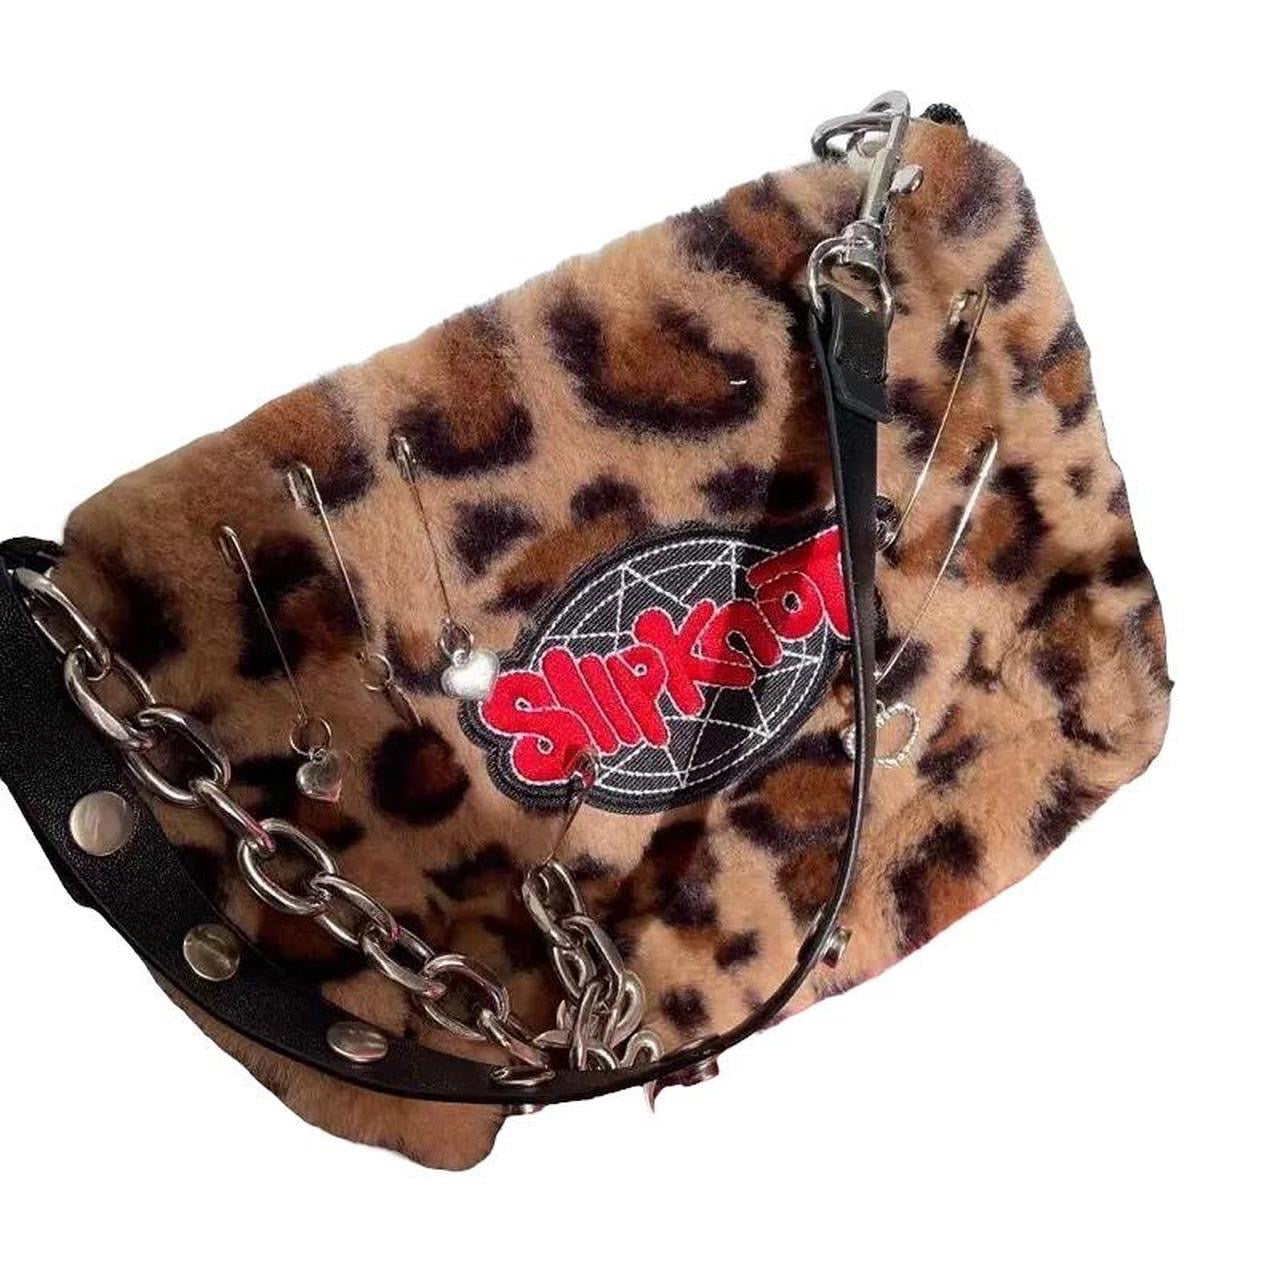 Brown Leopard Print Plush Punk Chain Shoulder Bag